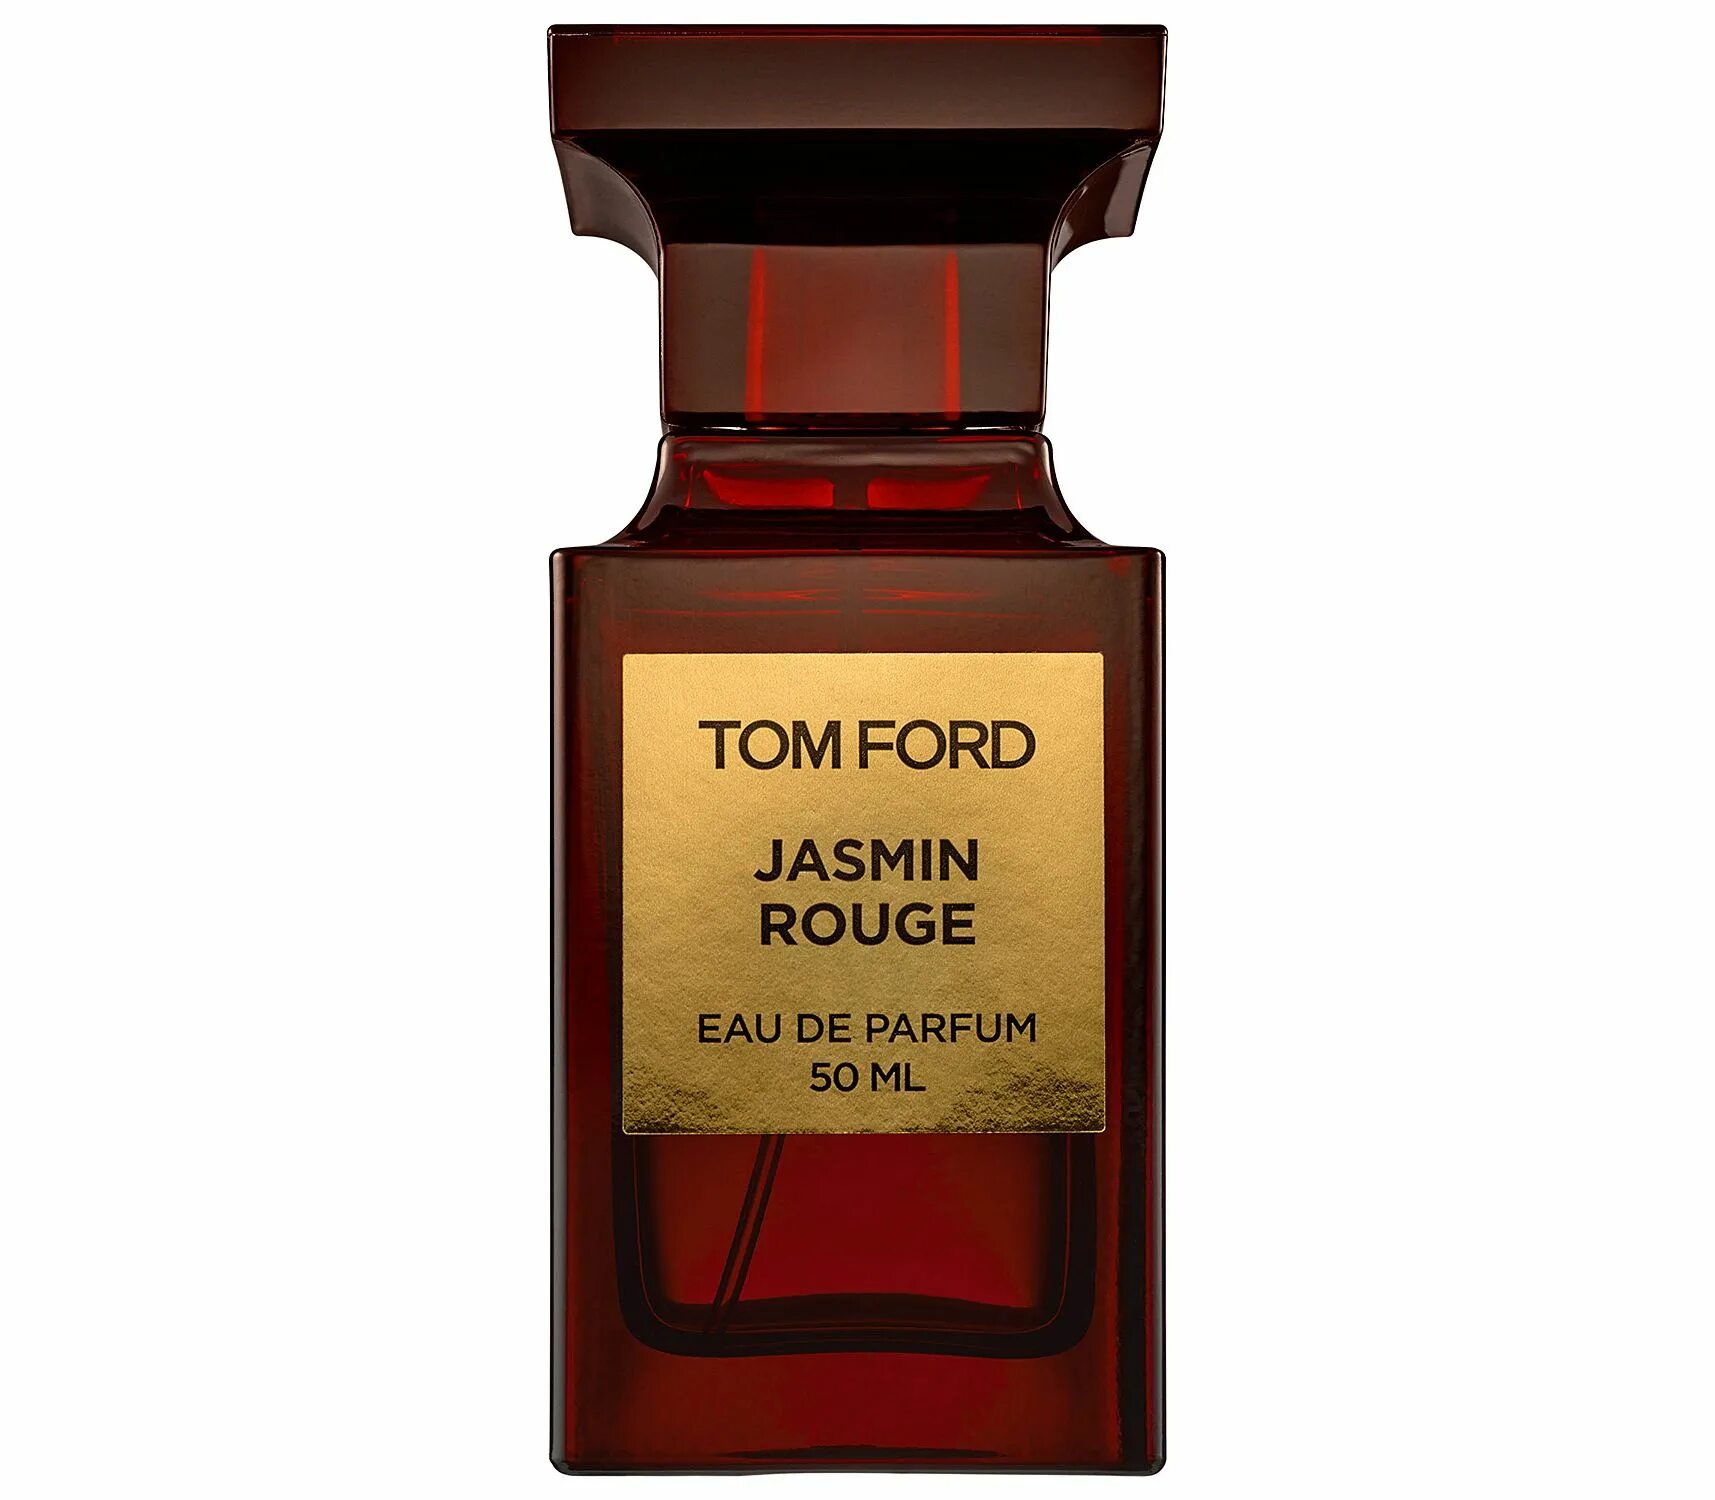 Tom Ford jasmin rouge 50 ml. Tom Ford jasmin rouge 50 мл. Tom Ford jasmin rouge 100 ml. Духи Tom Ford jasmin rouge. Том форт чери